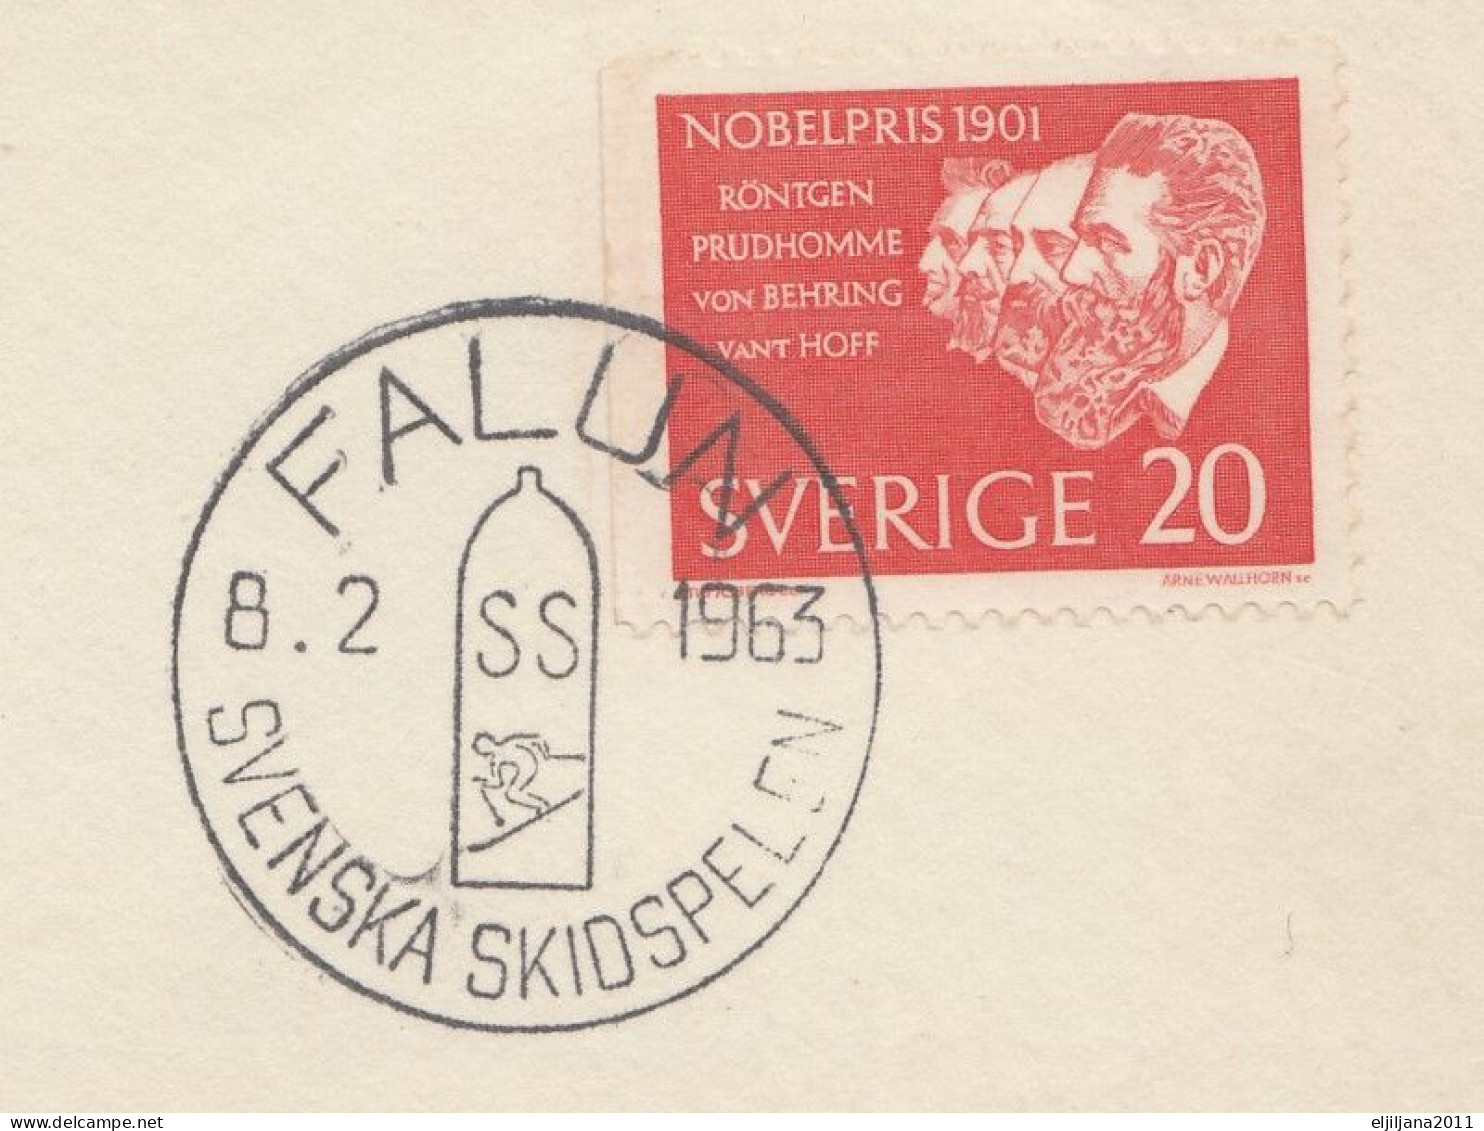 Action !! SALE !! 50 % OFF !! ⁕ Sweden / Sverige 1963  Skiing FALUN, SUNDSVALL, LULEA  3v Covers - Brieven En Documenten